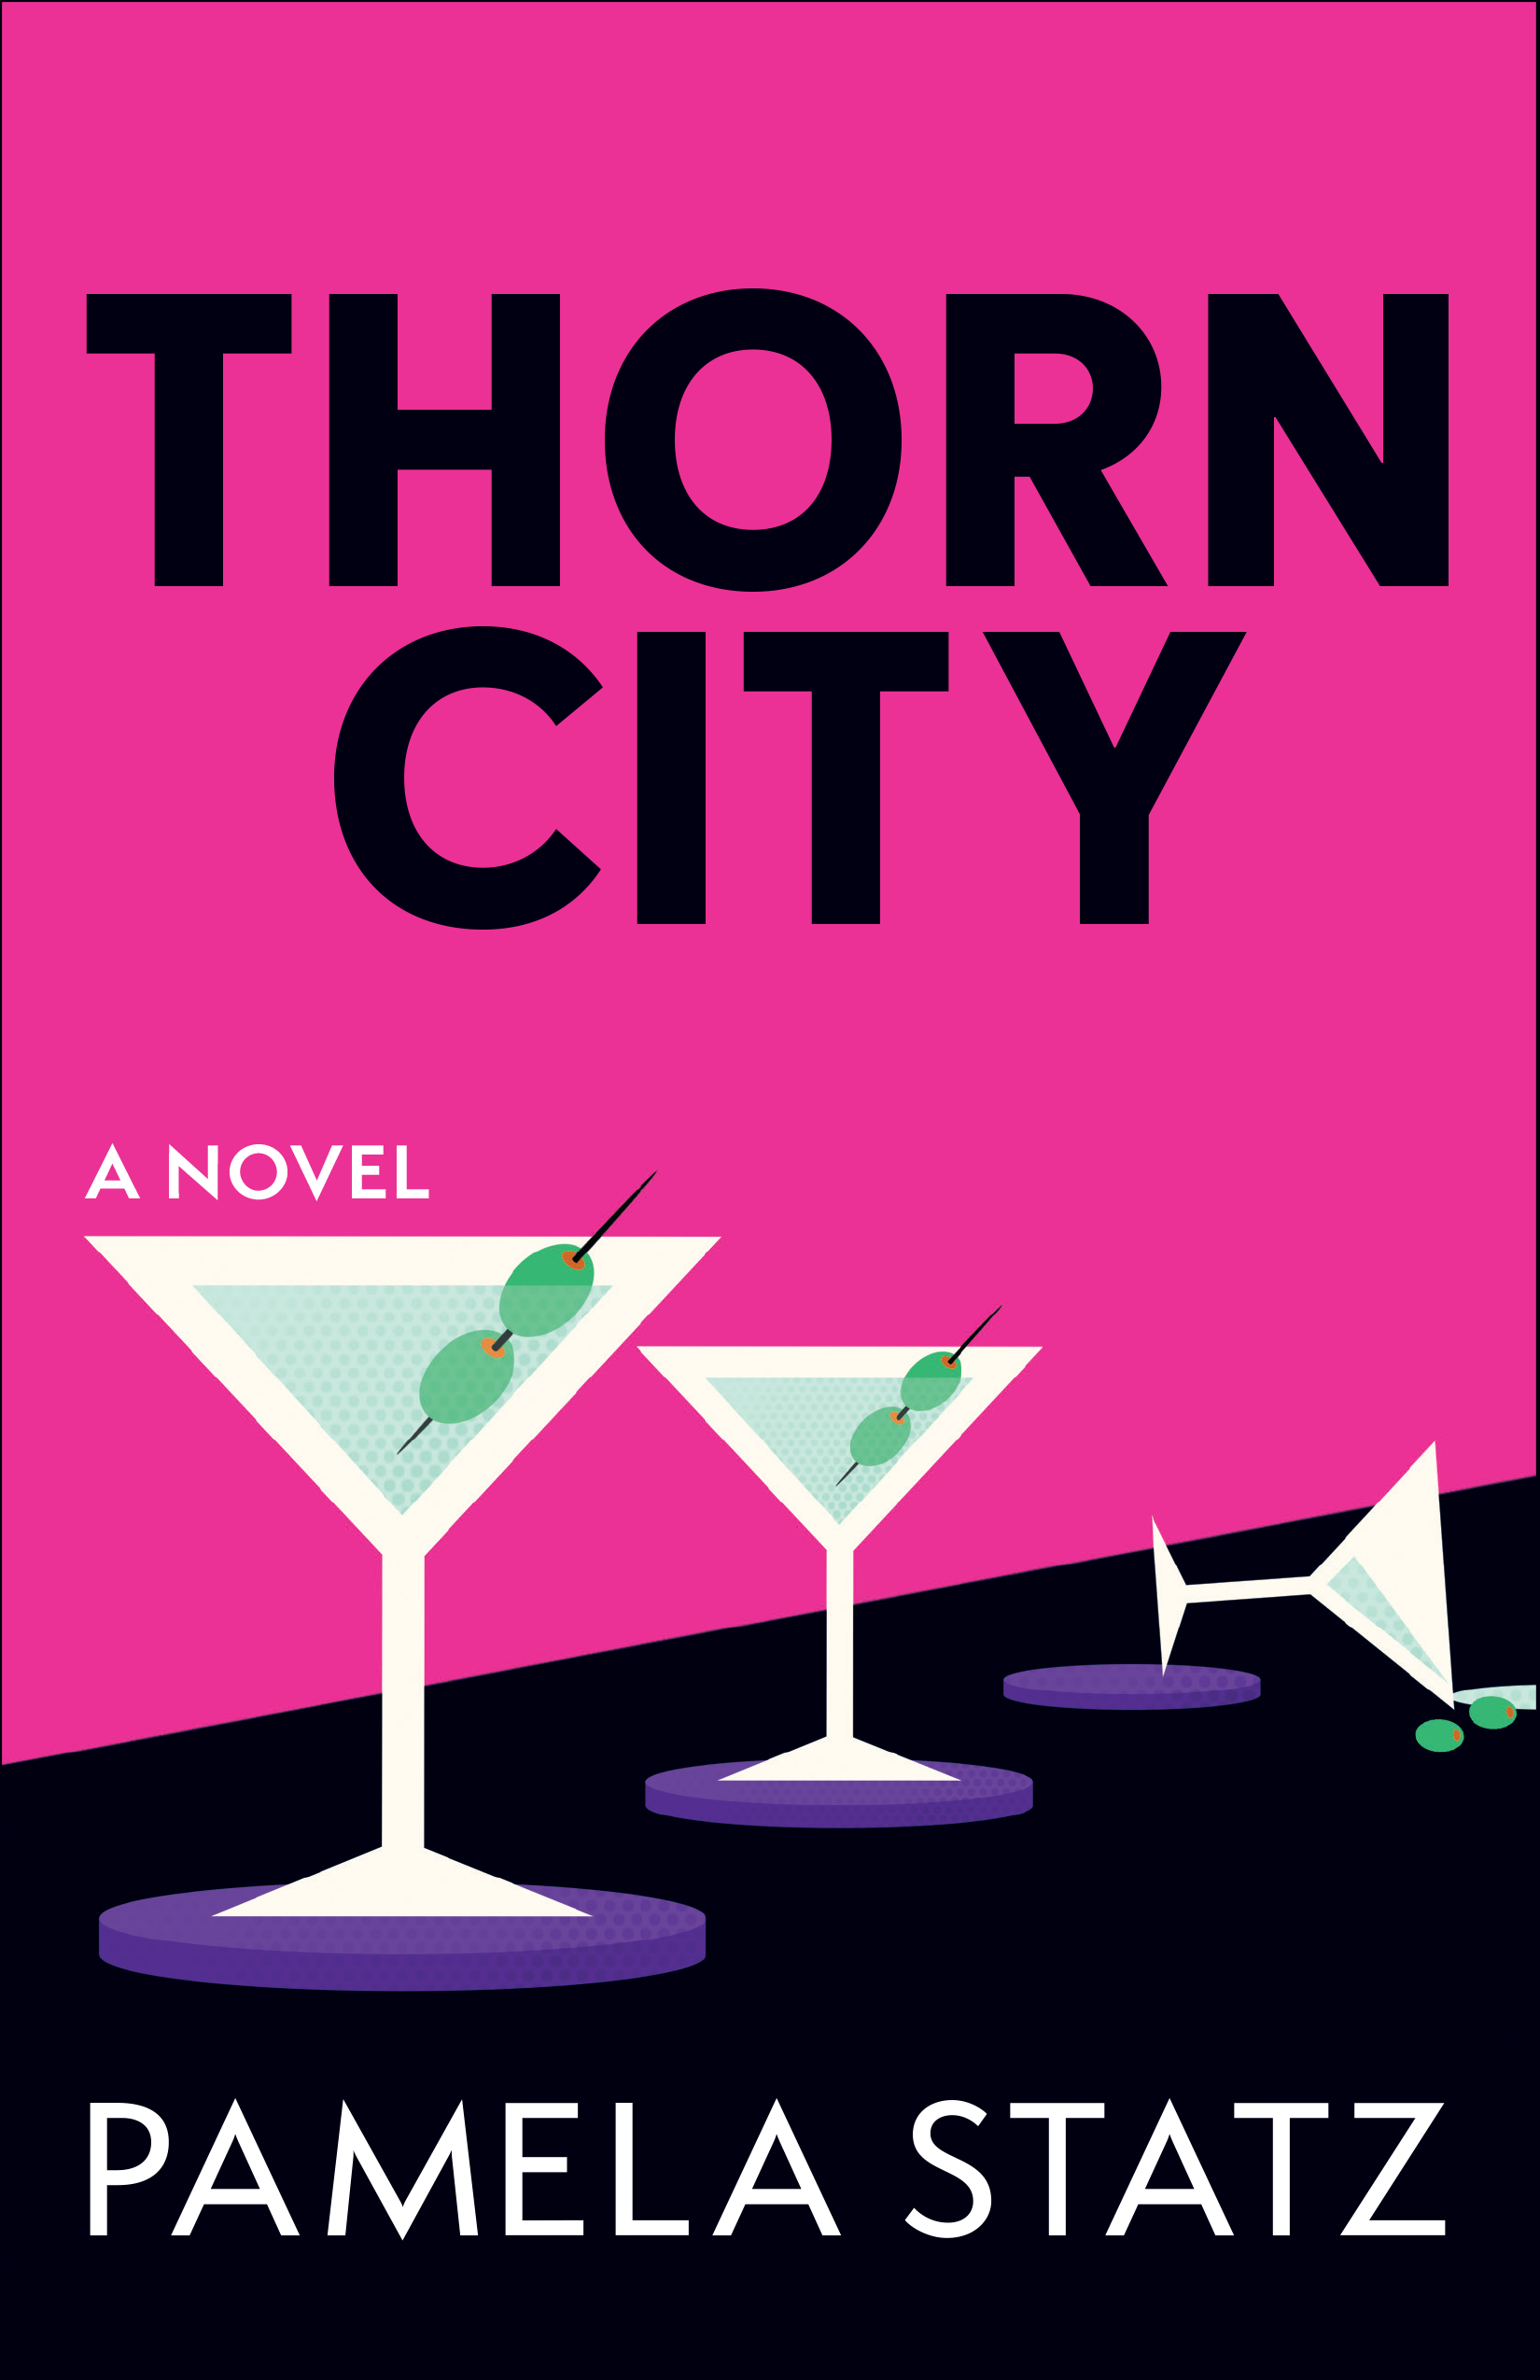 Download Thorn City PDF by Pamela Statz